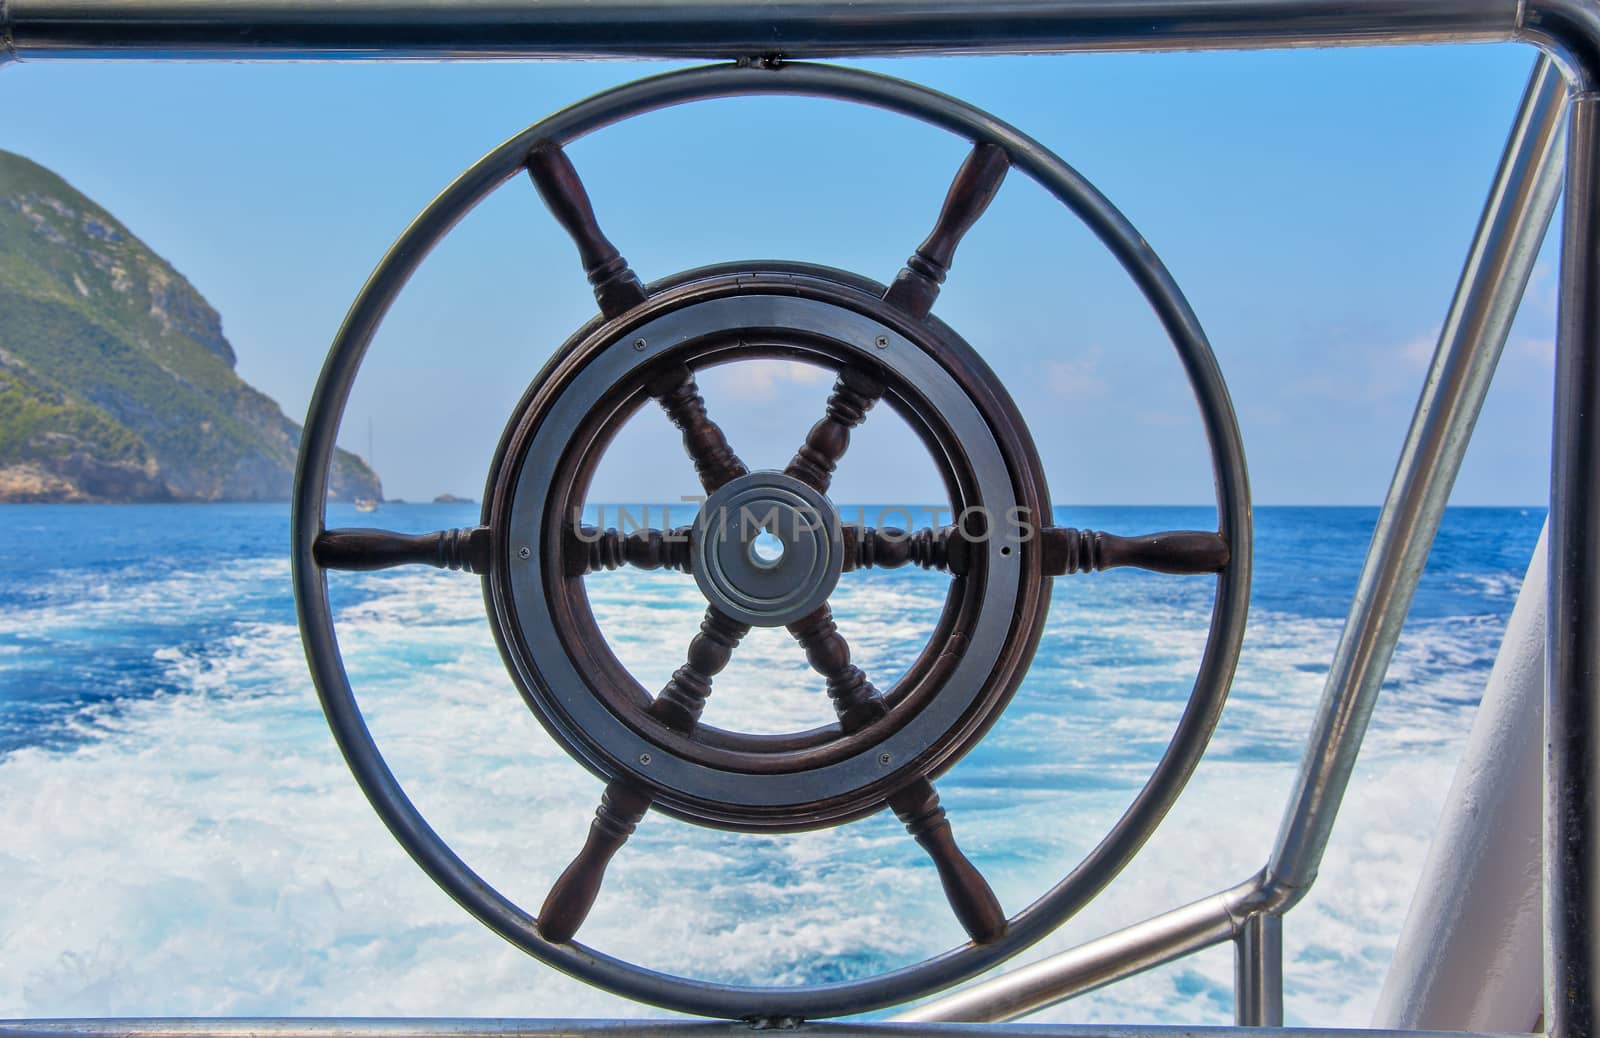 Steering wheel marine vessel as a decorative element by Grommik